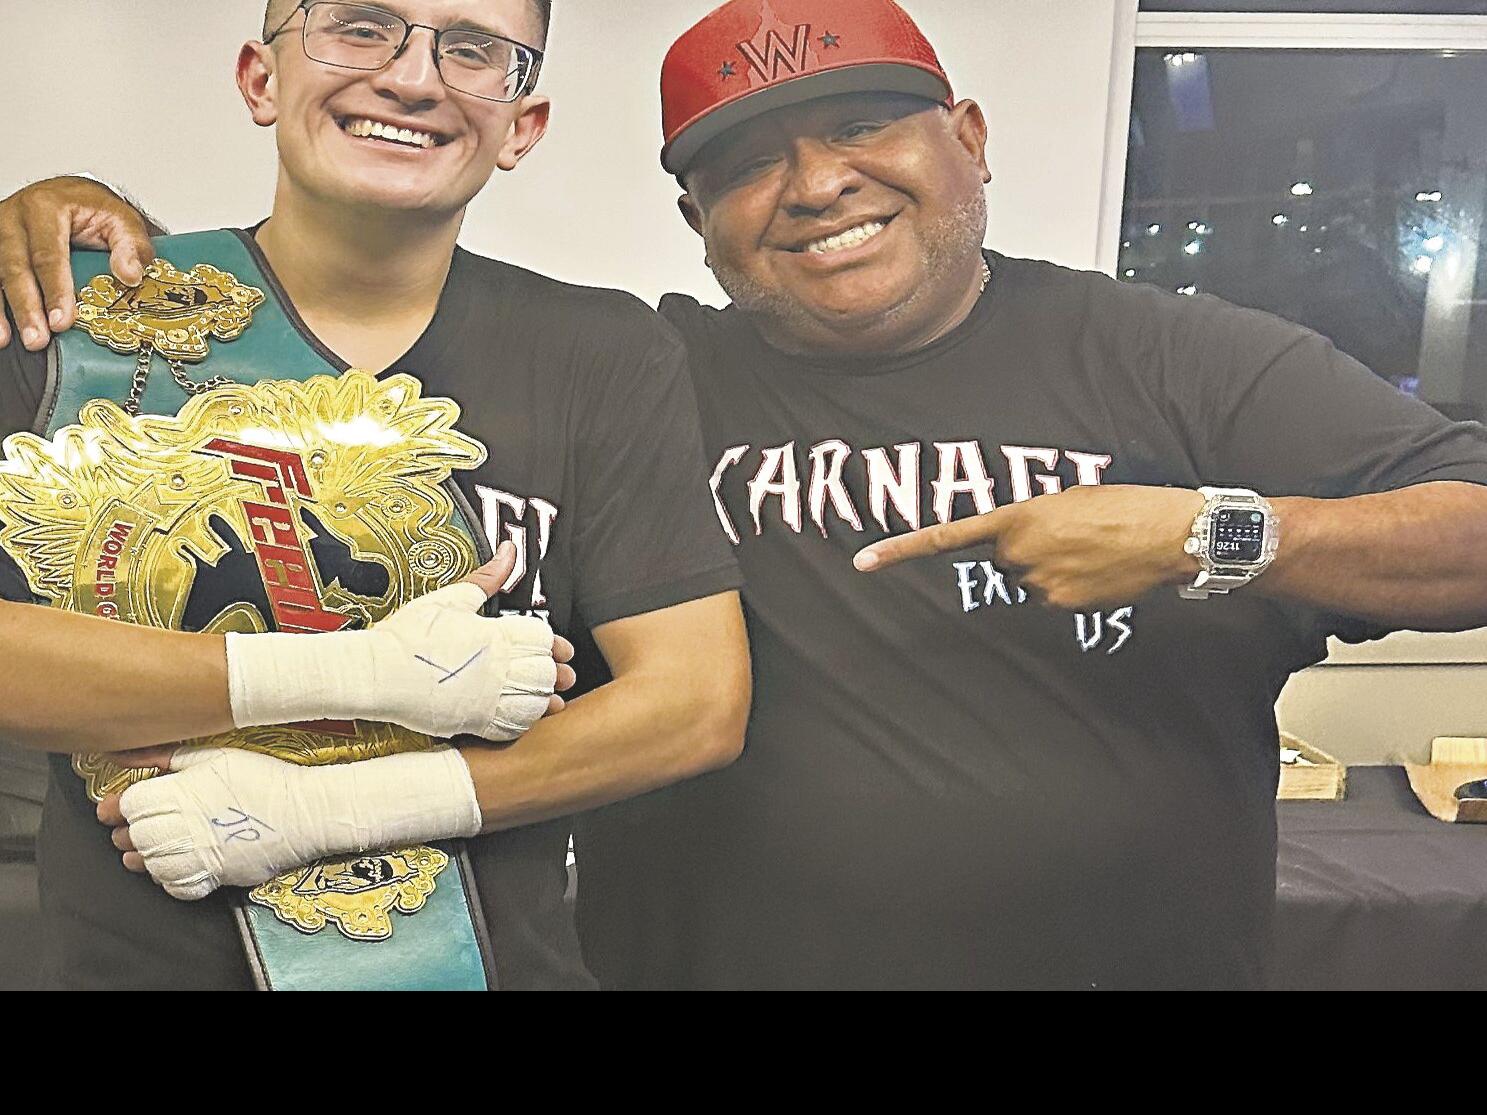 Koi Carney brings international Muay Thai Super Welterweight title to  Oklahoma, News